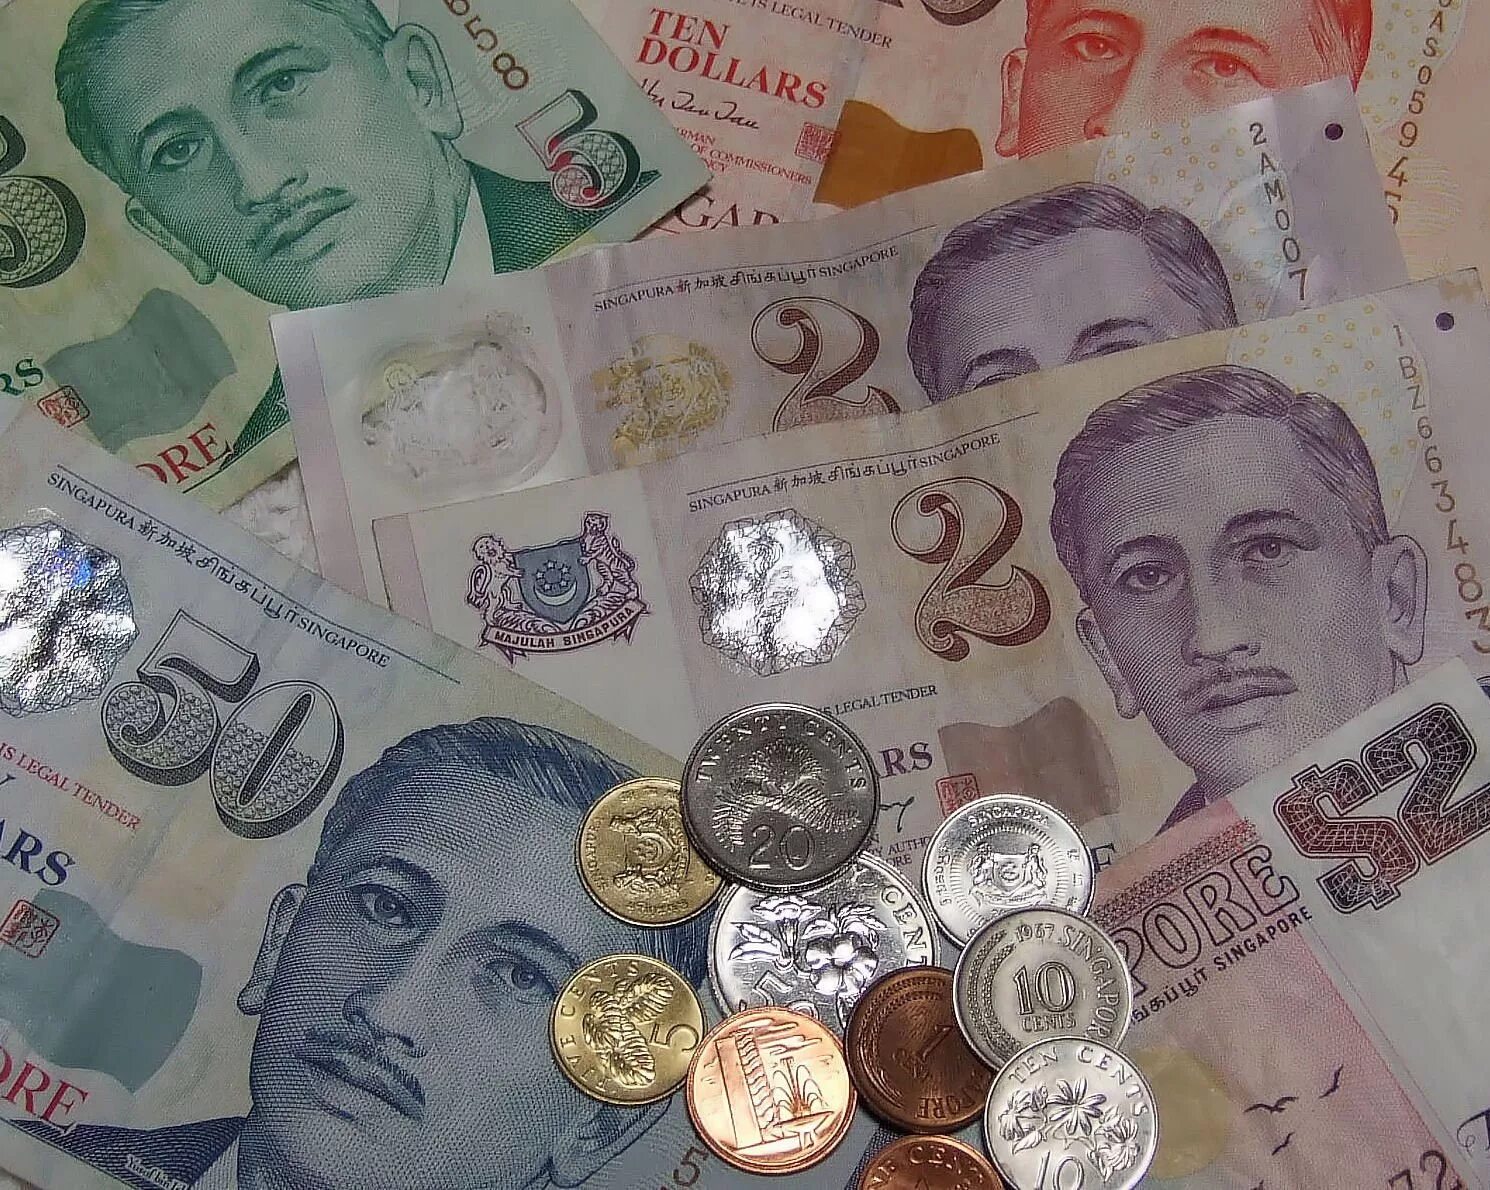 0 currencies. Валюта Сингапура. Валюта Сингапурский доллар. Национальная валюта Сингапура. Сингапурский доллар купюры.